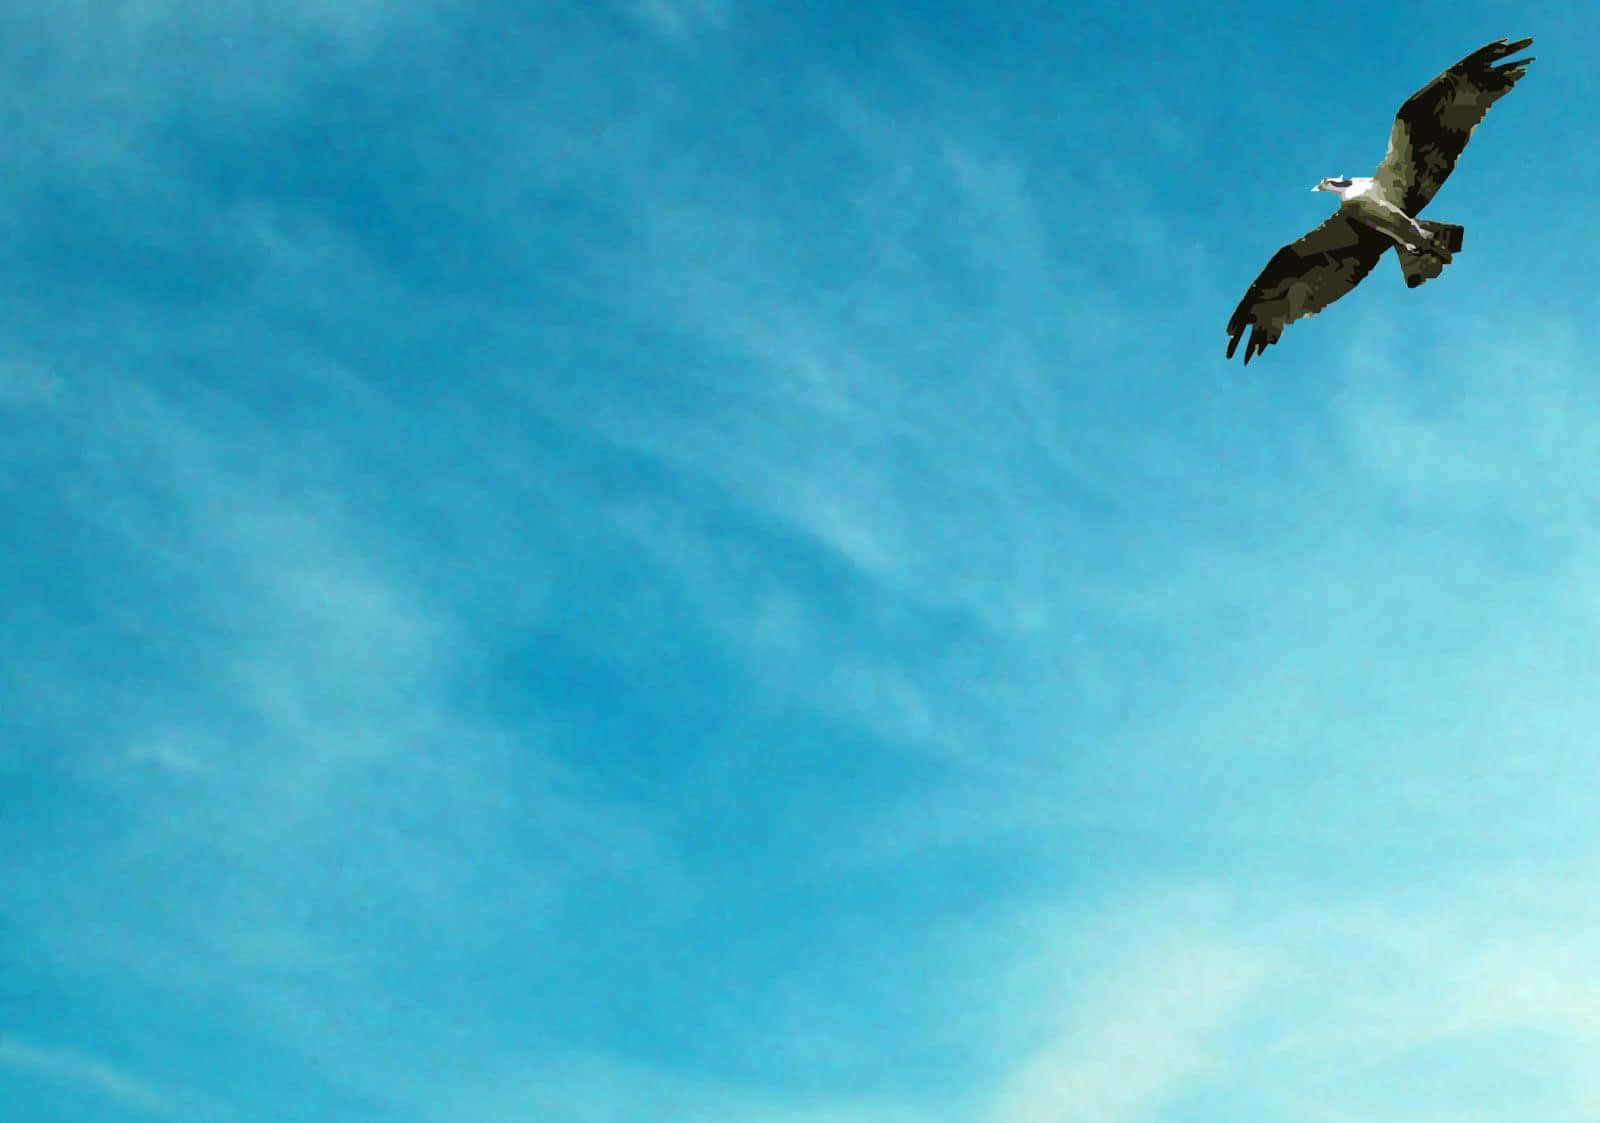 A majestic bald eagle spreads its wings in flight